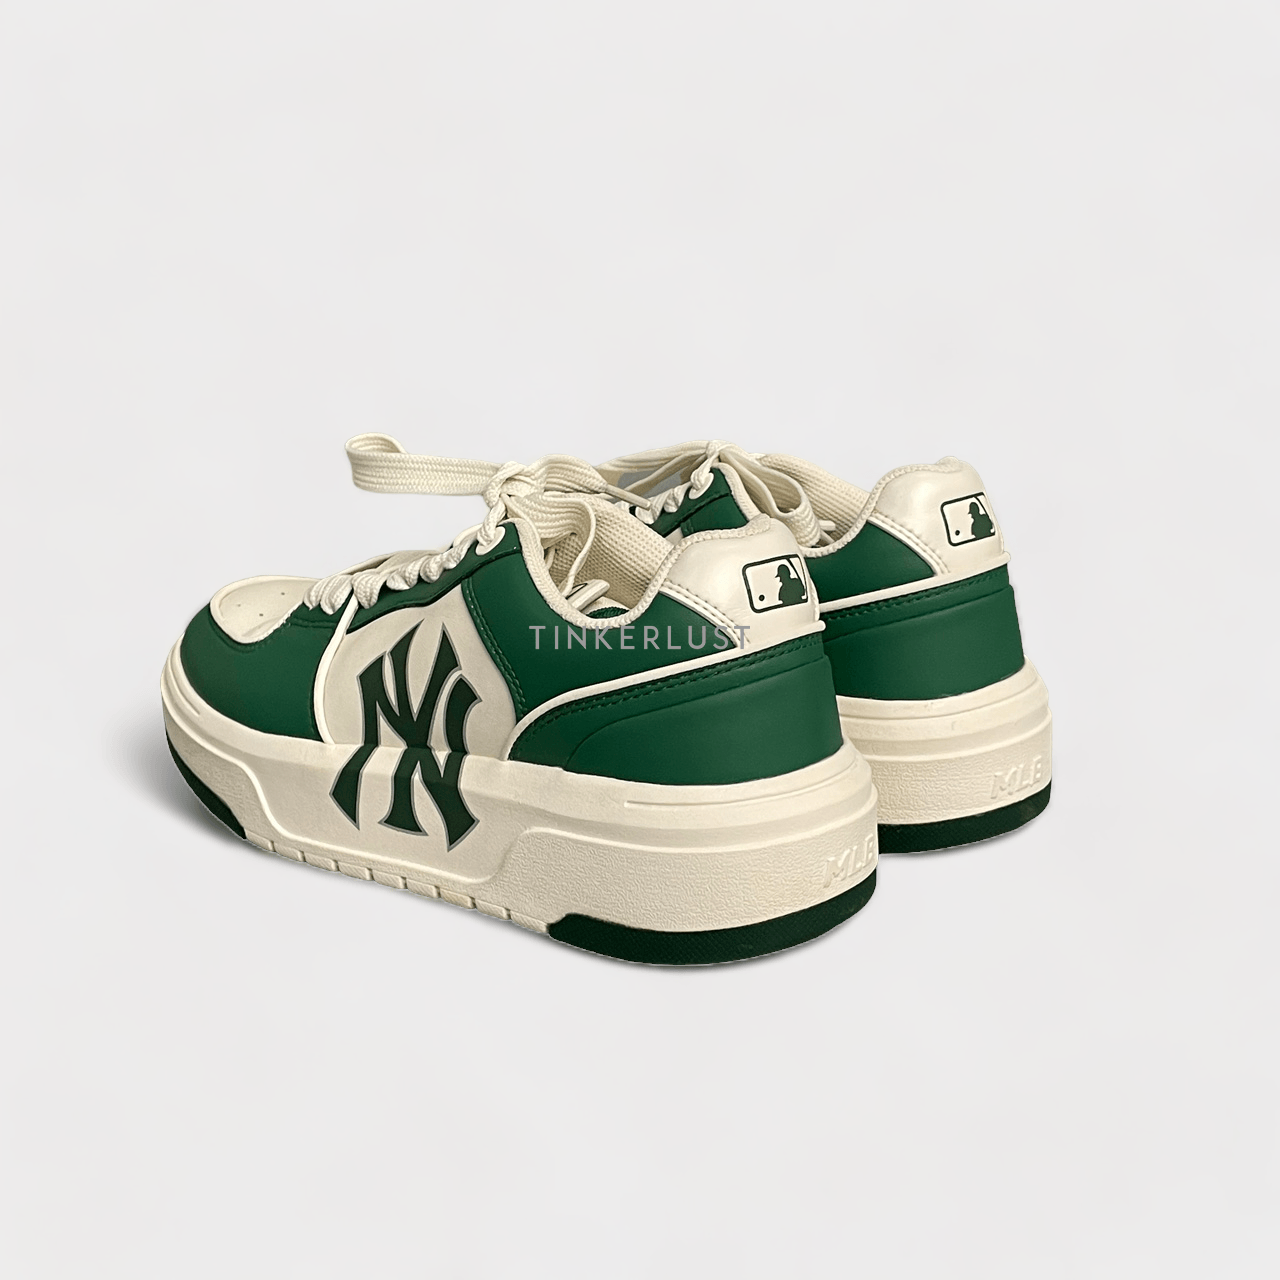 MLB  Green & White Sneakers